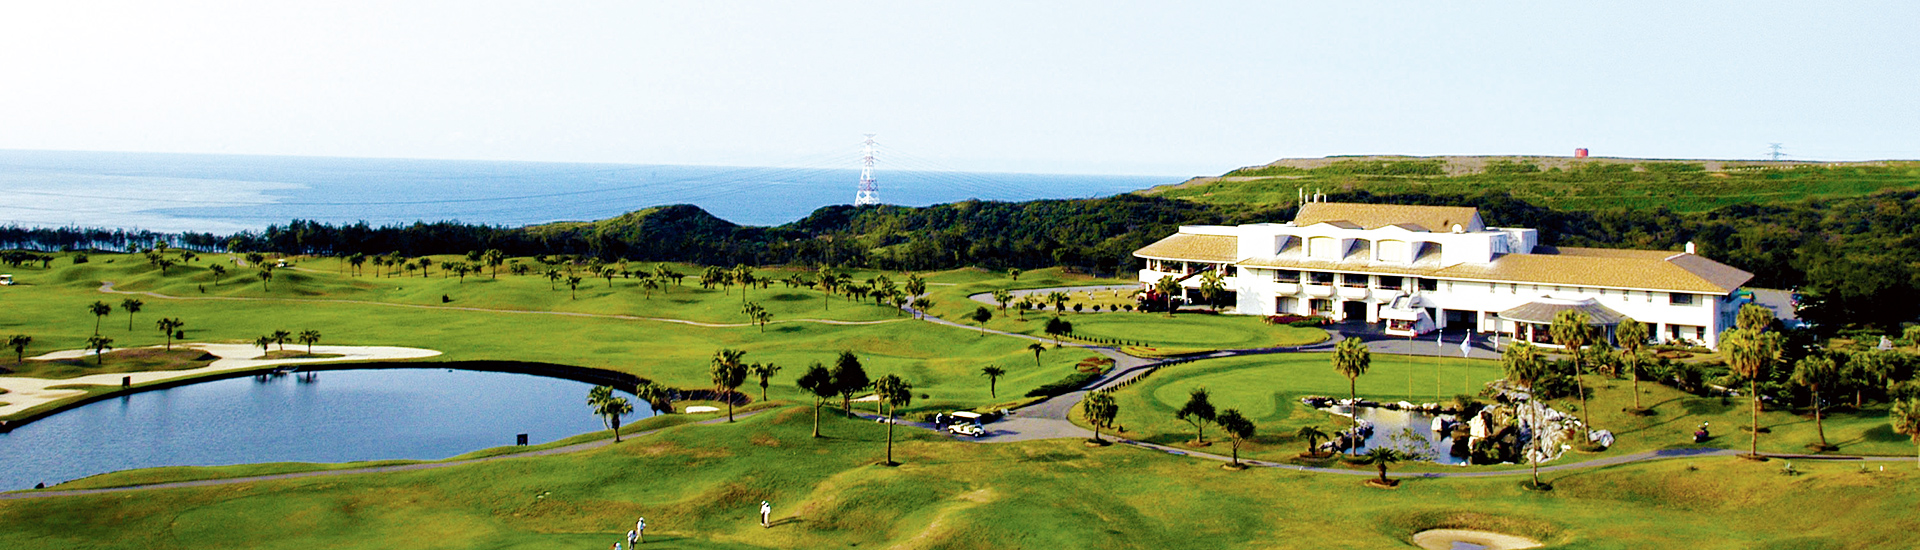 Tong Hwa Golf & Country Club